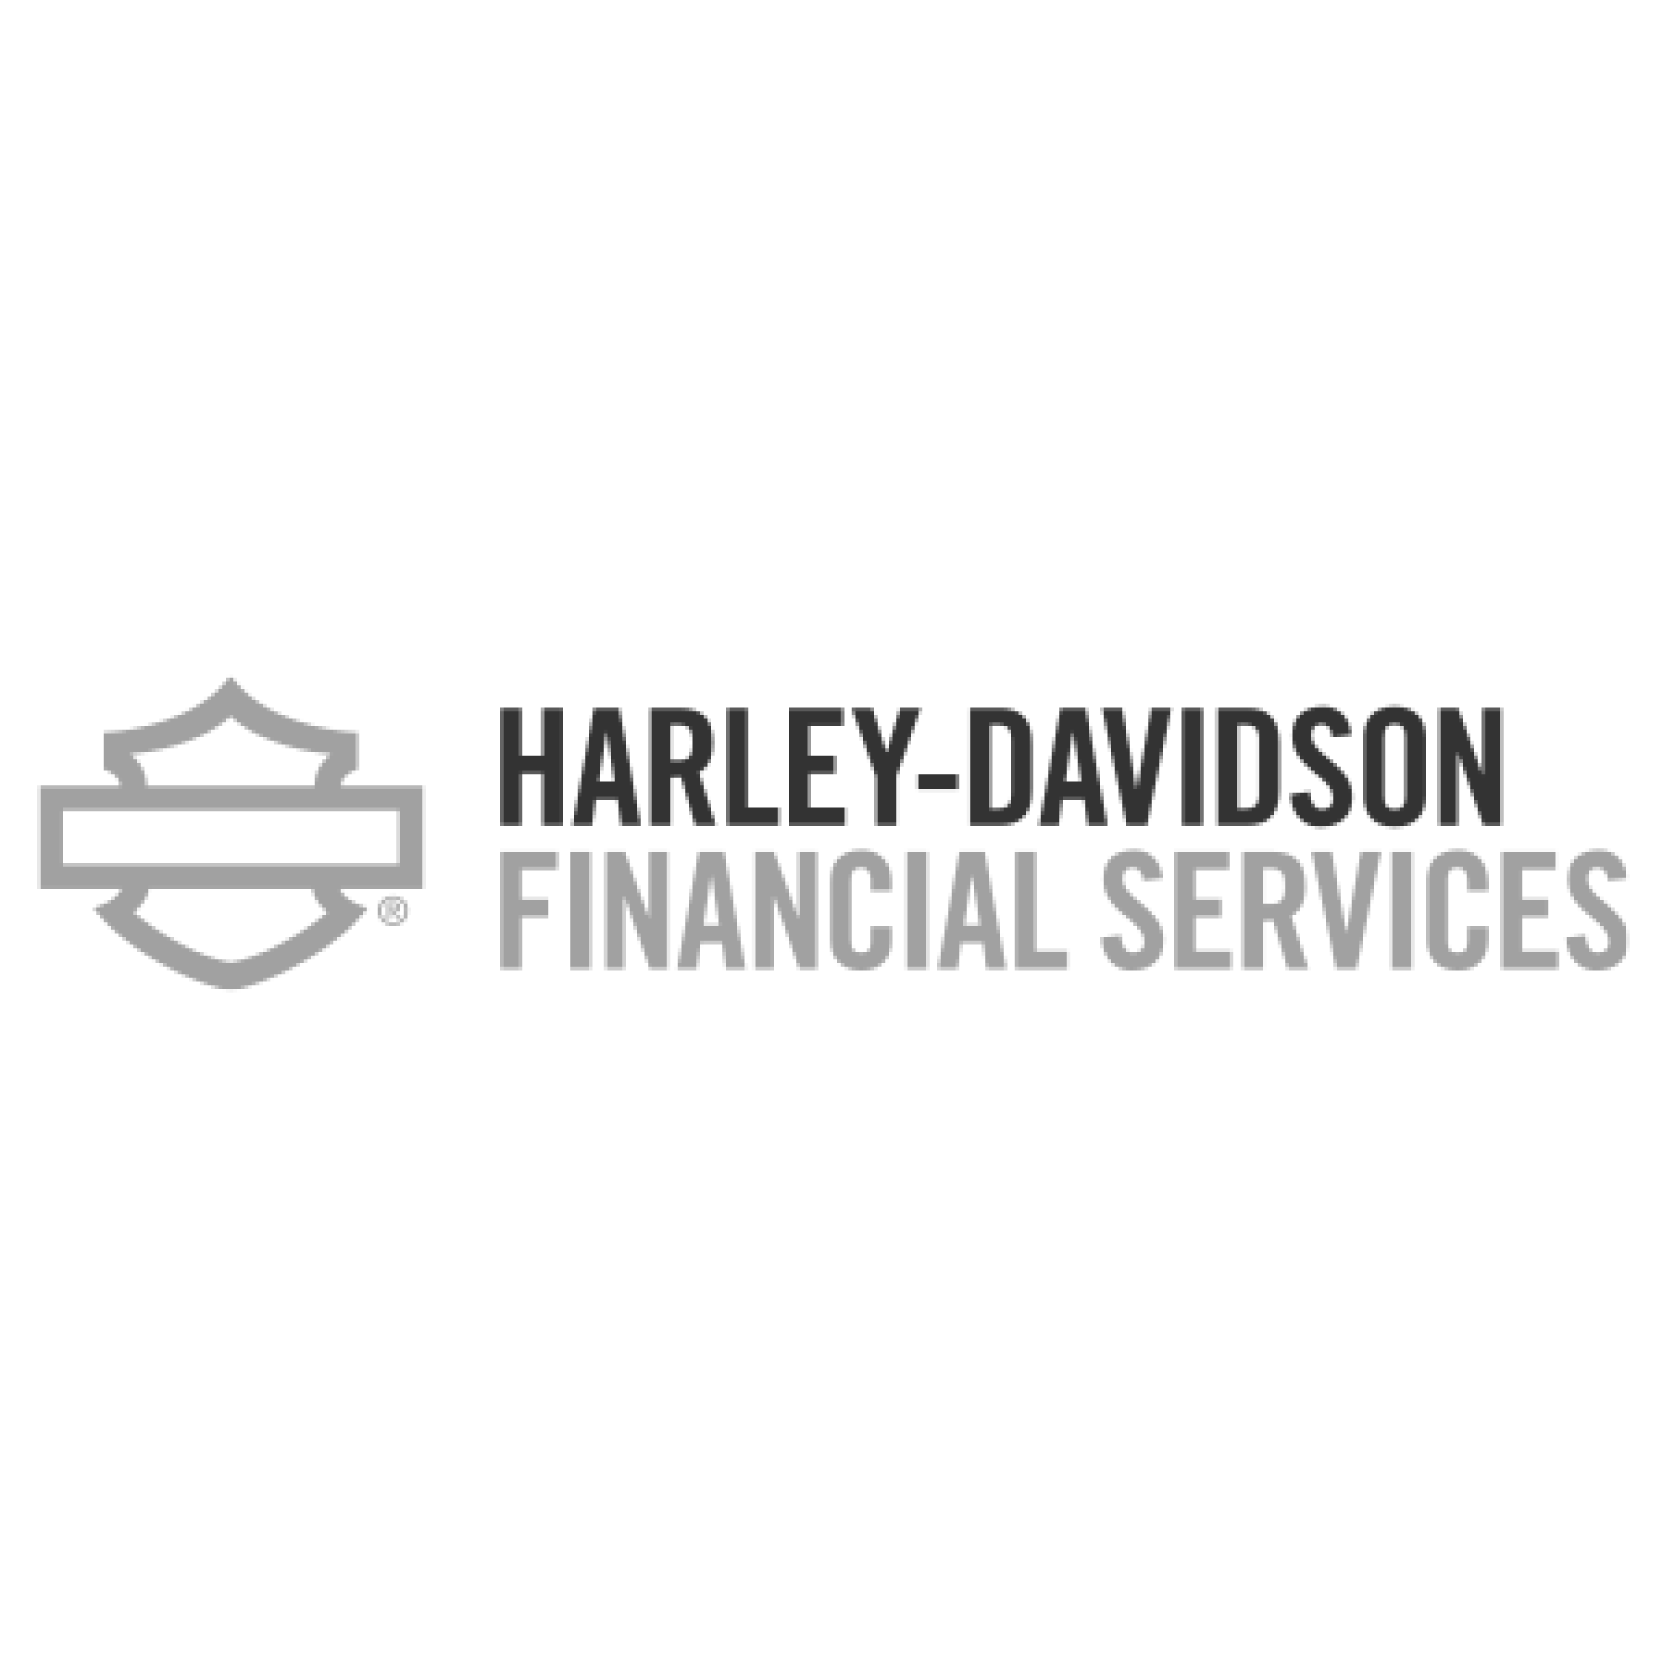 Harley-Davidson Financial Services-01